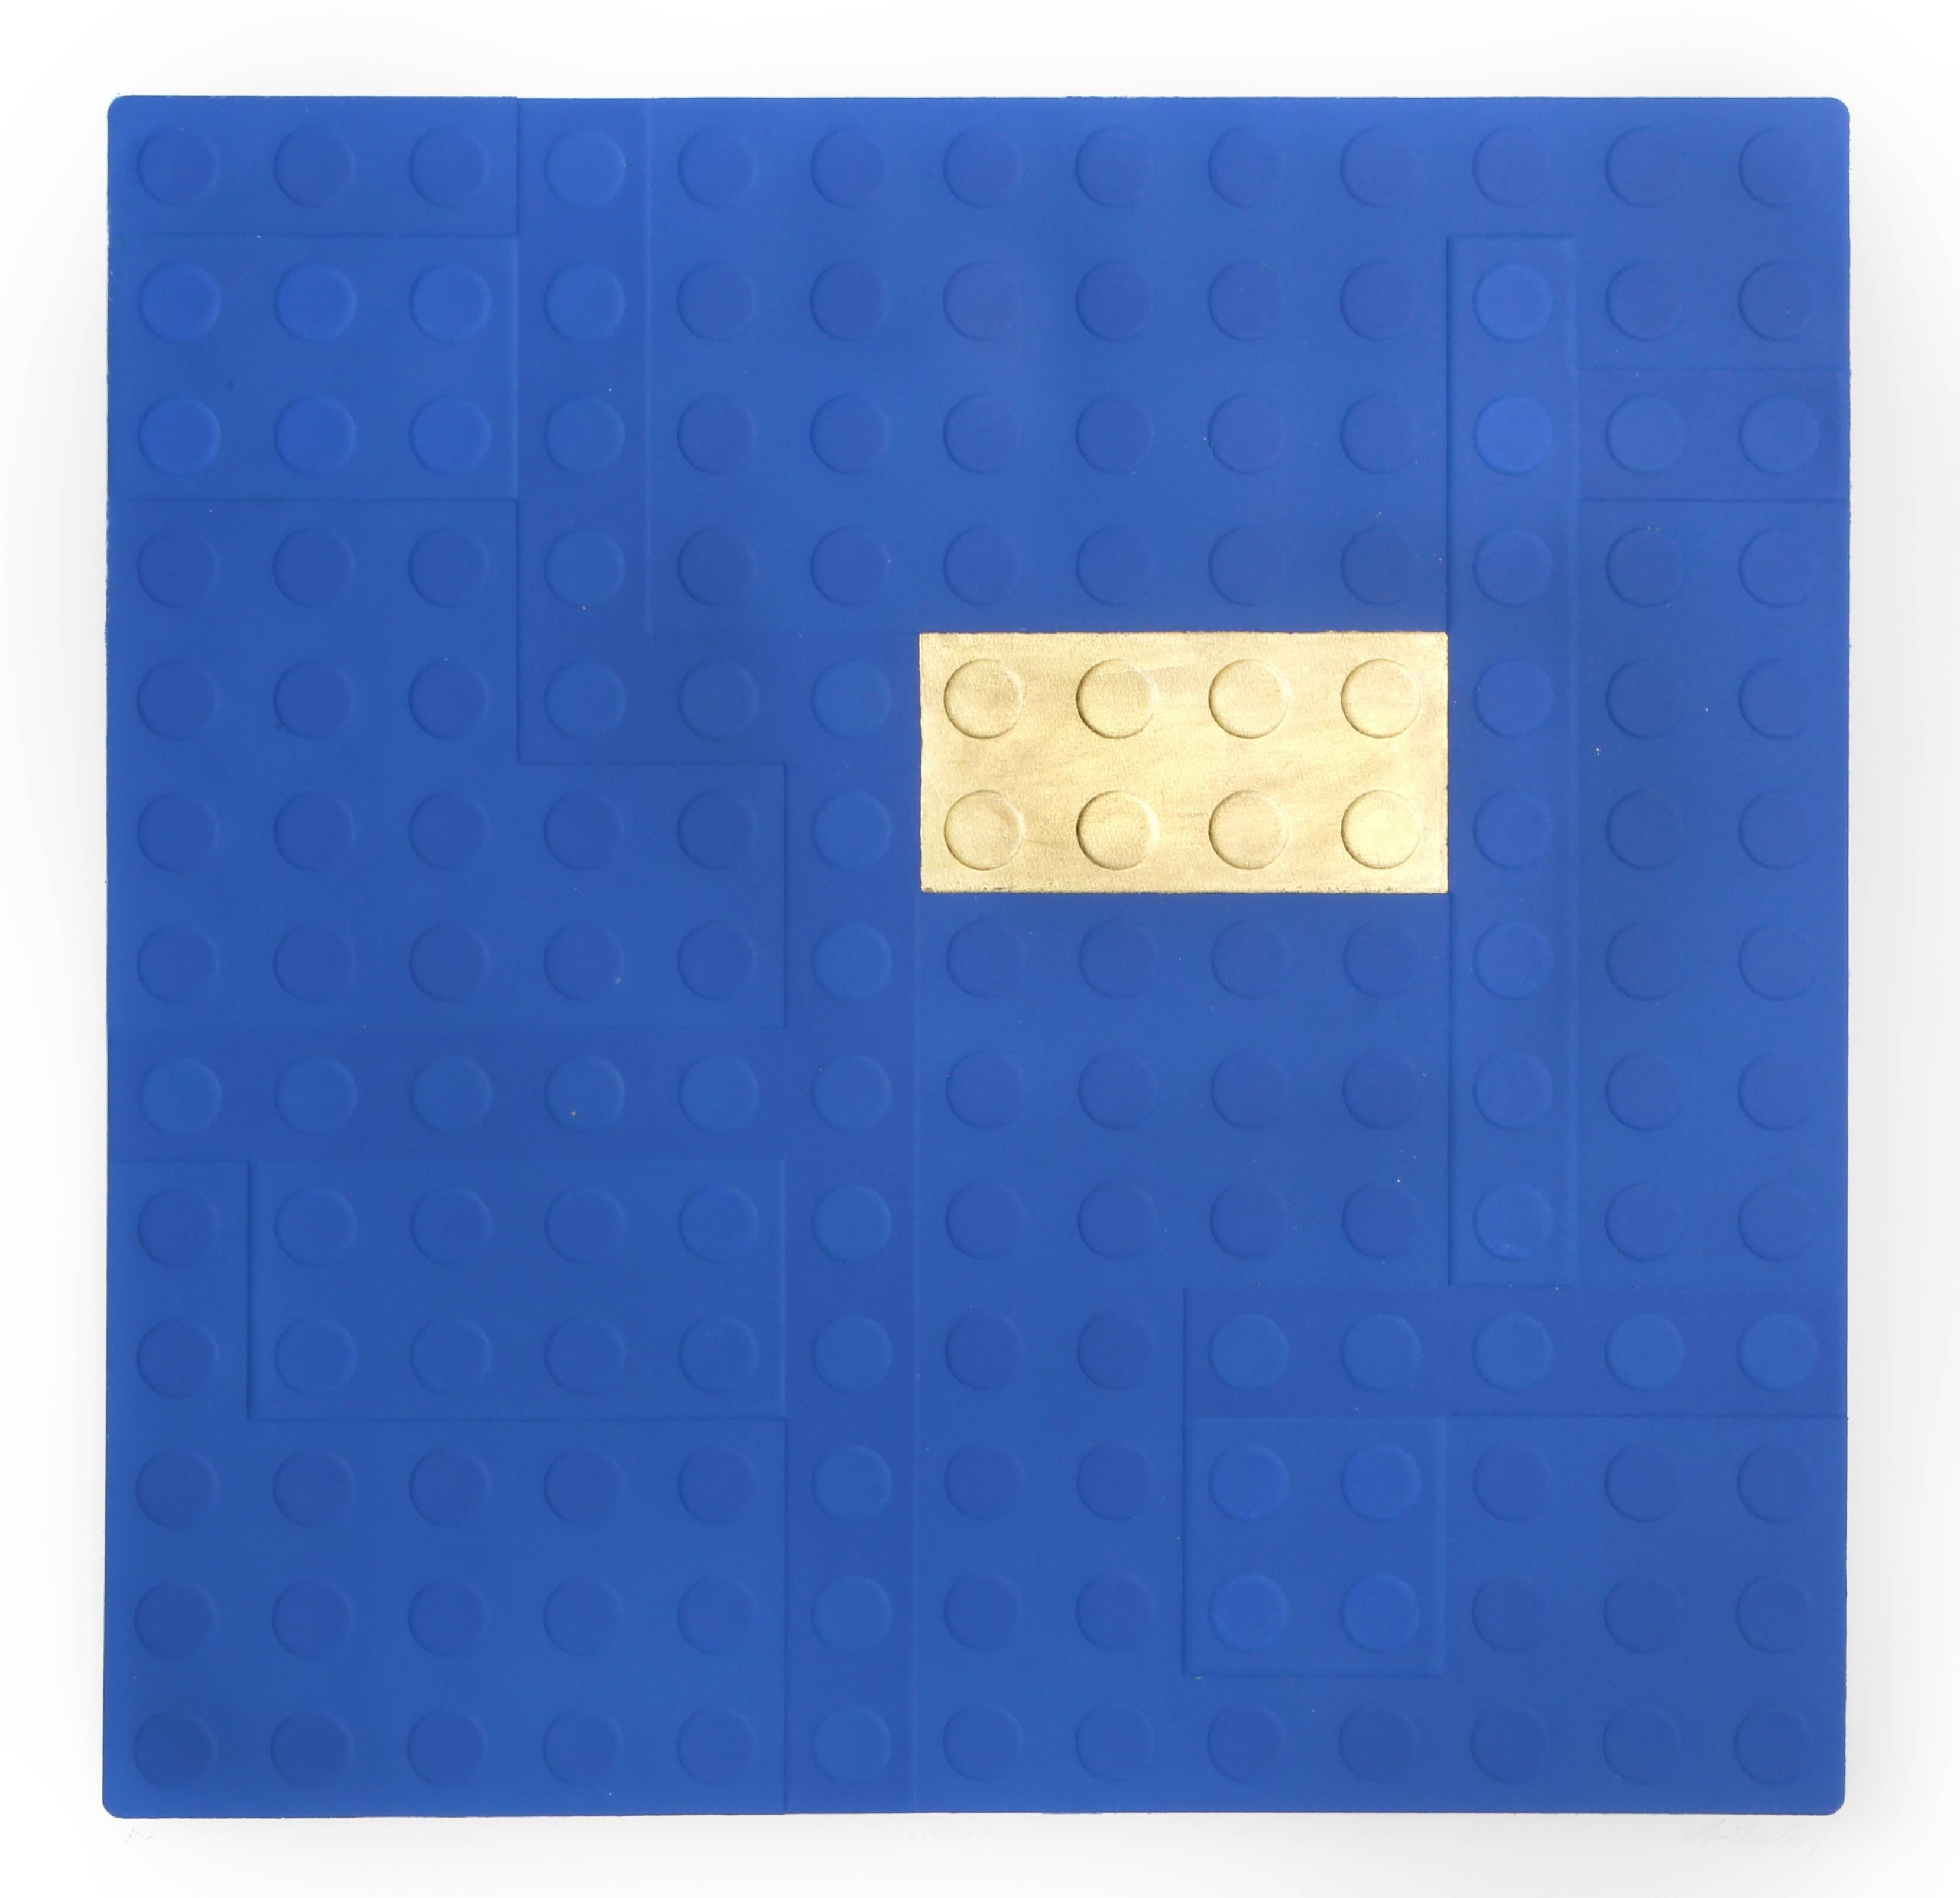 Lego (Blue), Aquatint Etching with Gold Leaf by Matteo Negri